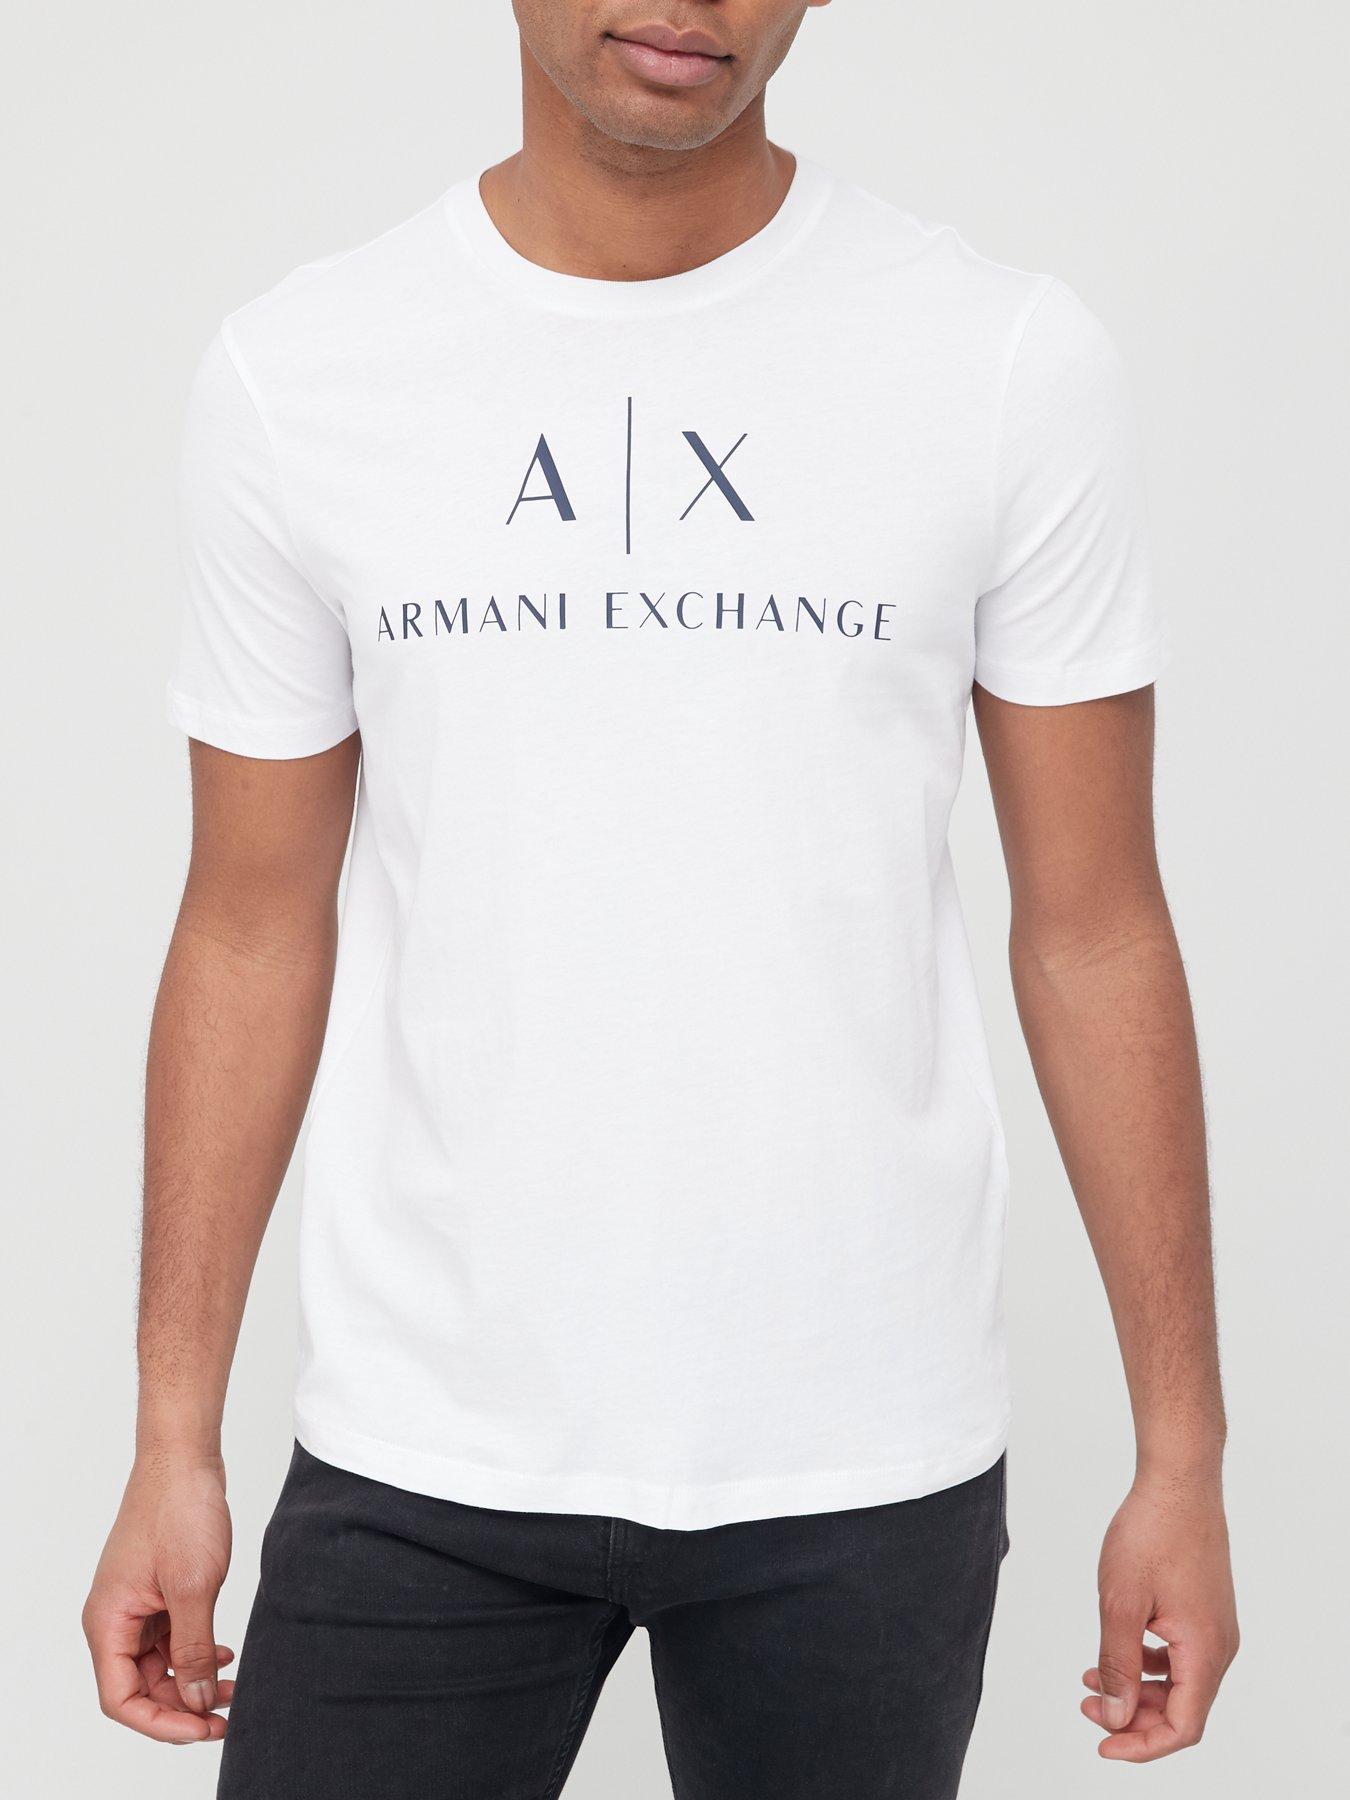  AX Logo Print T-shirt - White